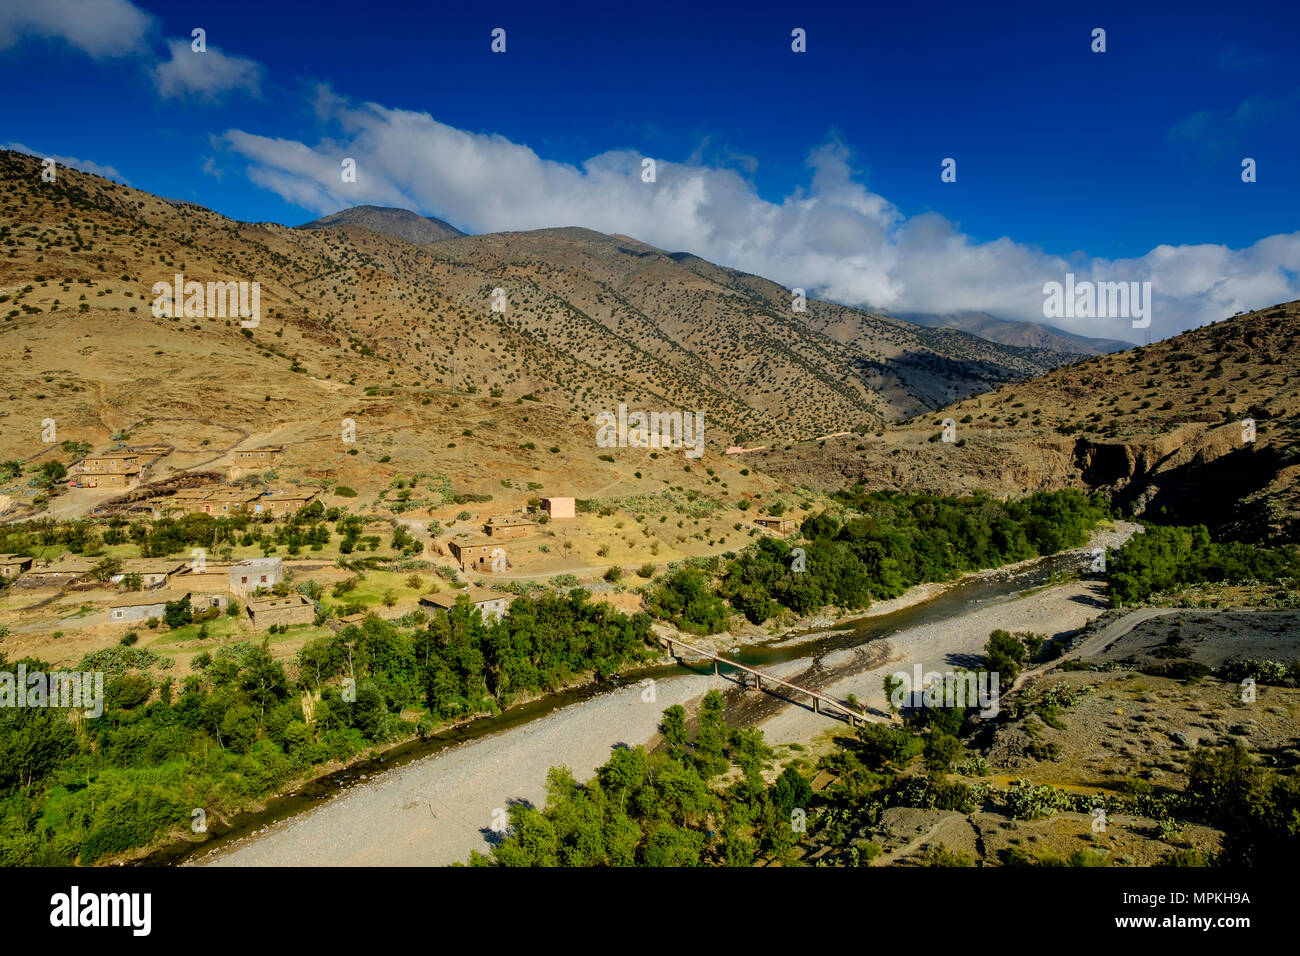 Landscape near the village of Toug el Kheïr, Morocco, North Africa Stock Photo